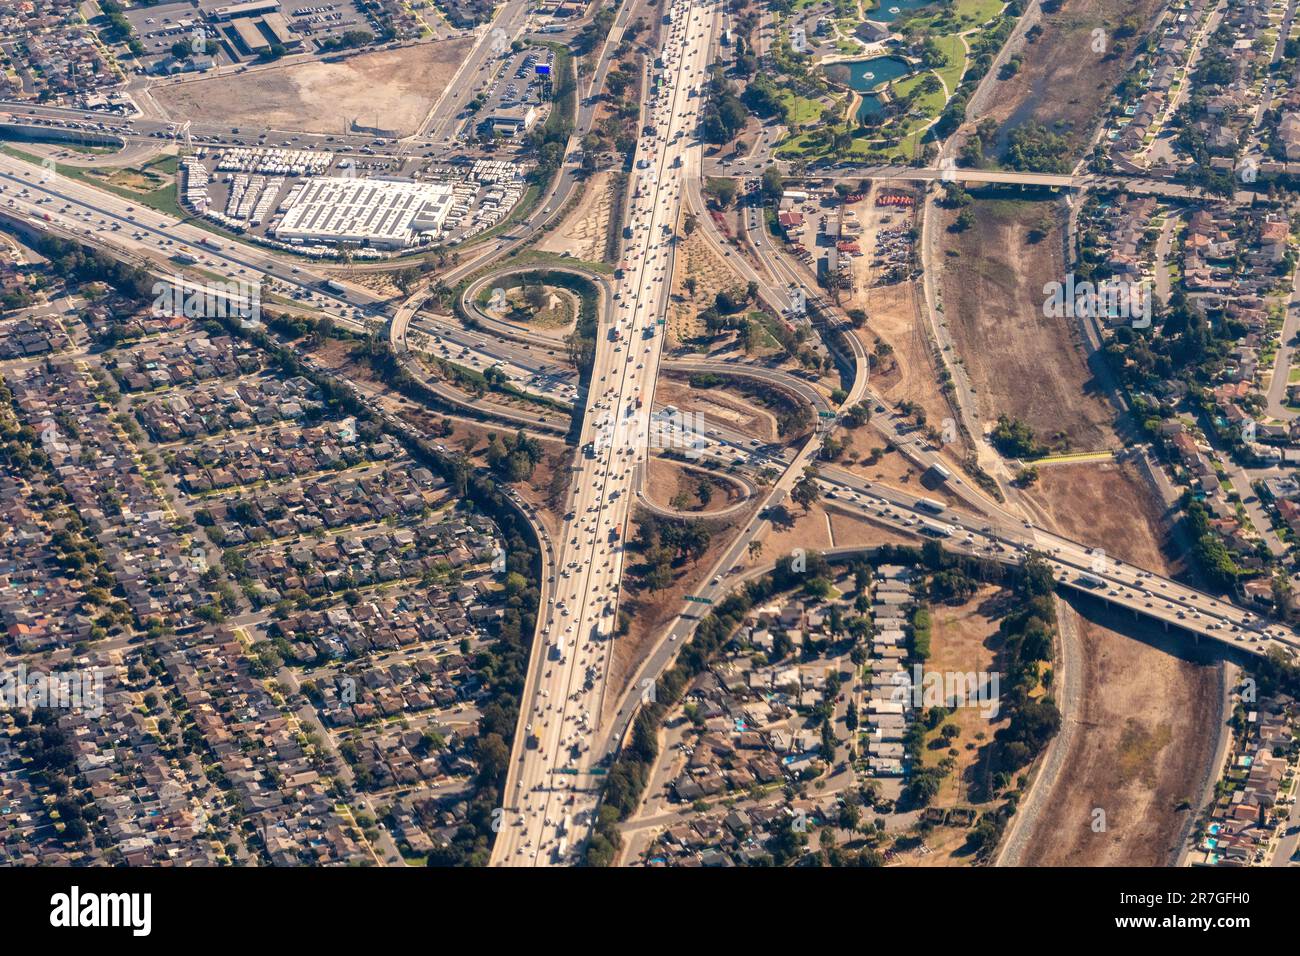 Vista aerea della i-5 Santa Ana Freeway e i-605 San Gabriel Freeway Interchange a Santa Fe Springs, California, sul fiume San Gabriel Foto Stock